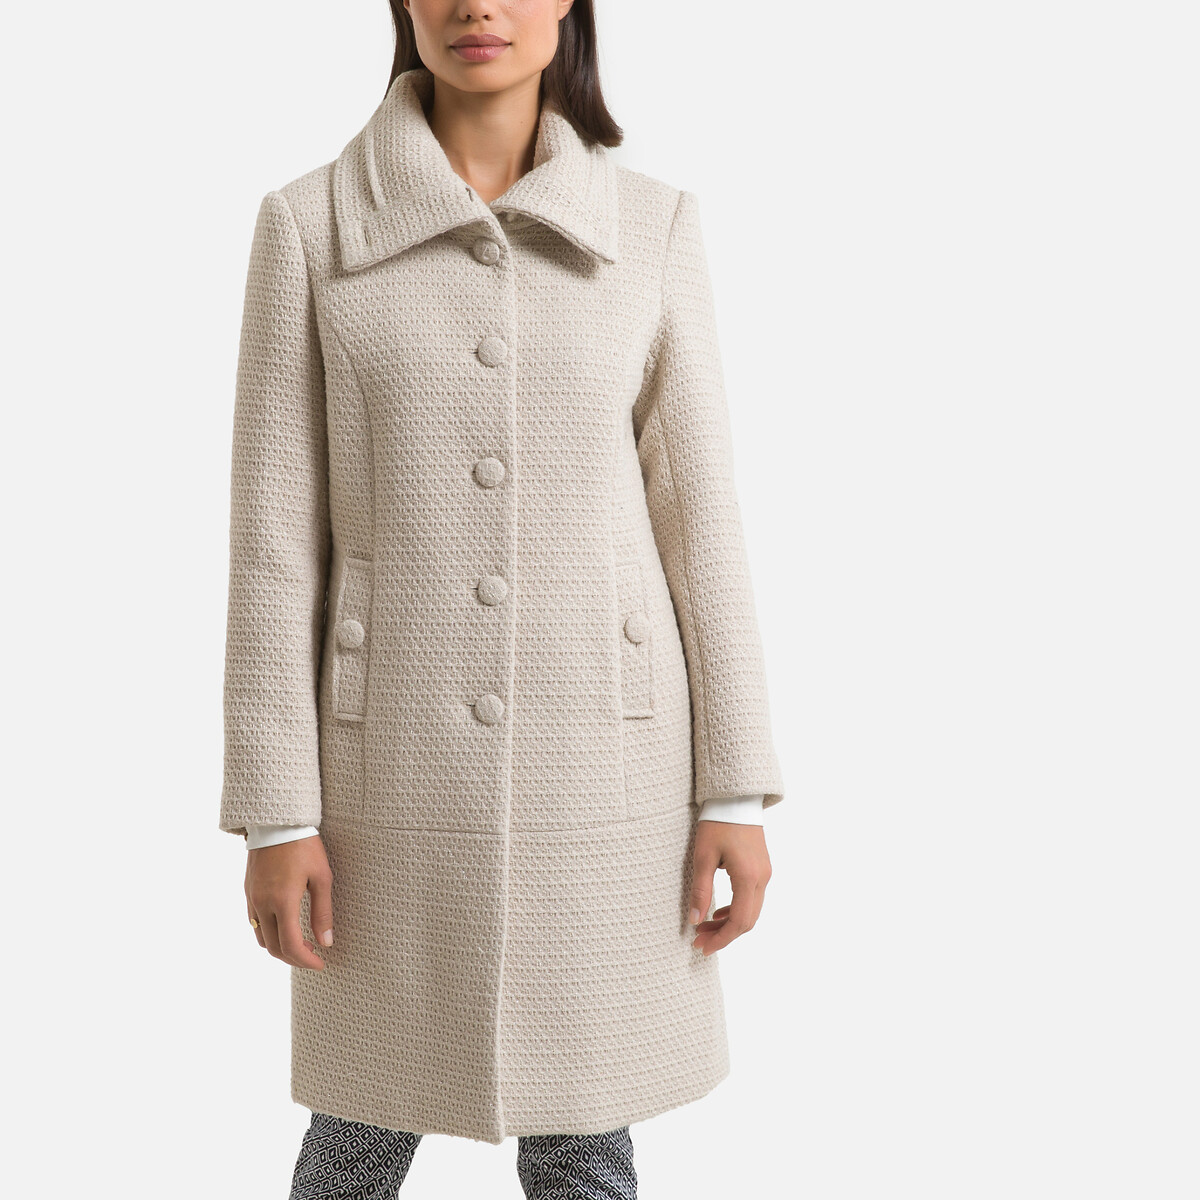 Пальто LaRedoute С отделкой под вышивку 40 (FR) - 46 (RUS) белый, размер 40 (FR) - 46 (RUS)